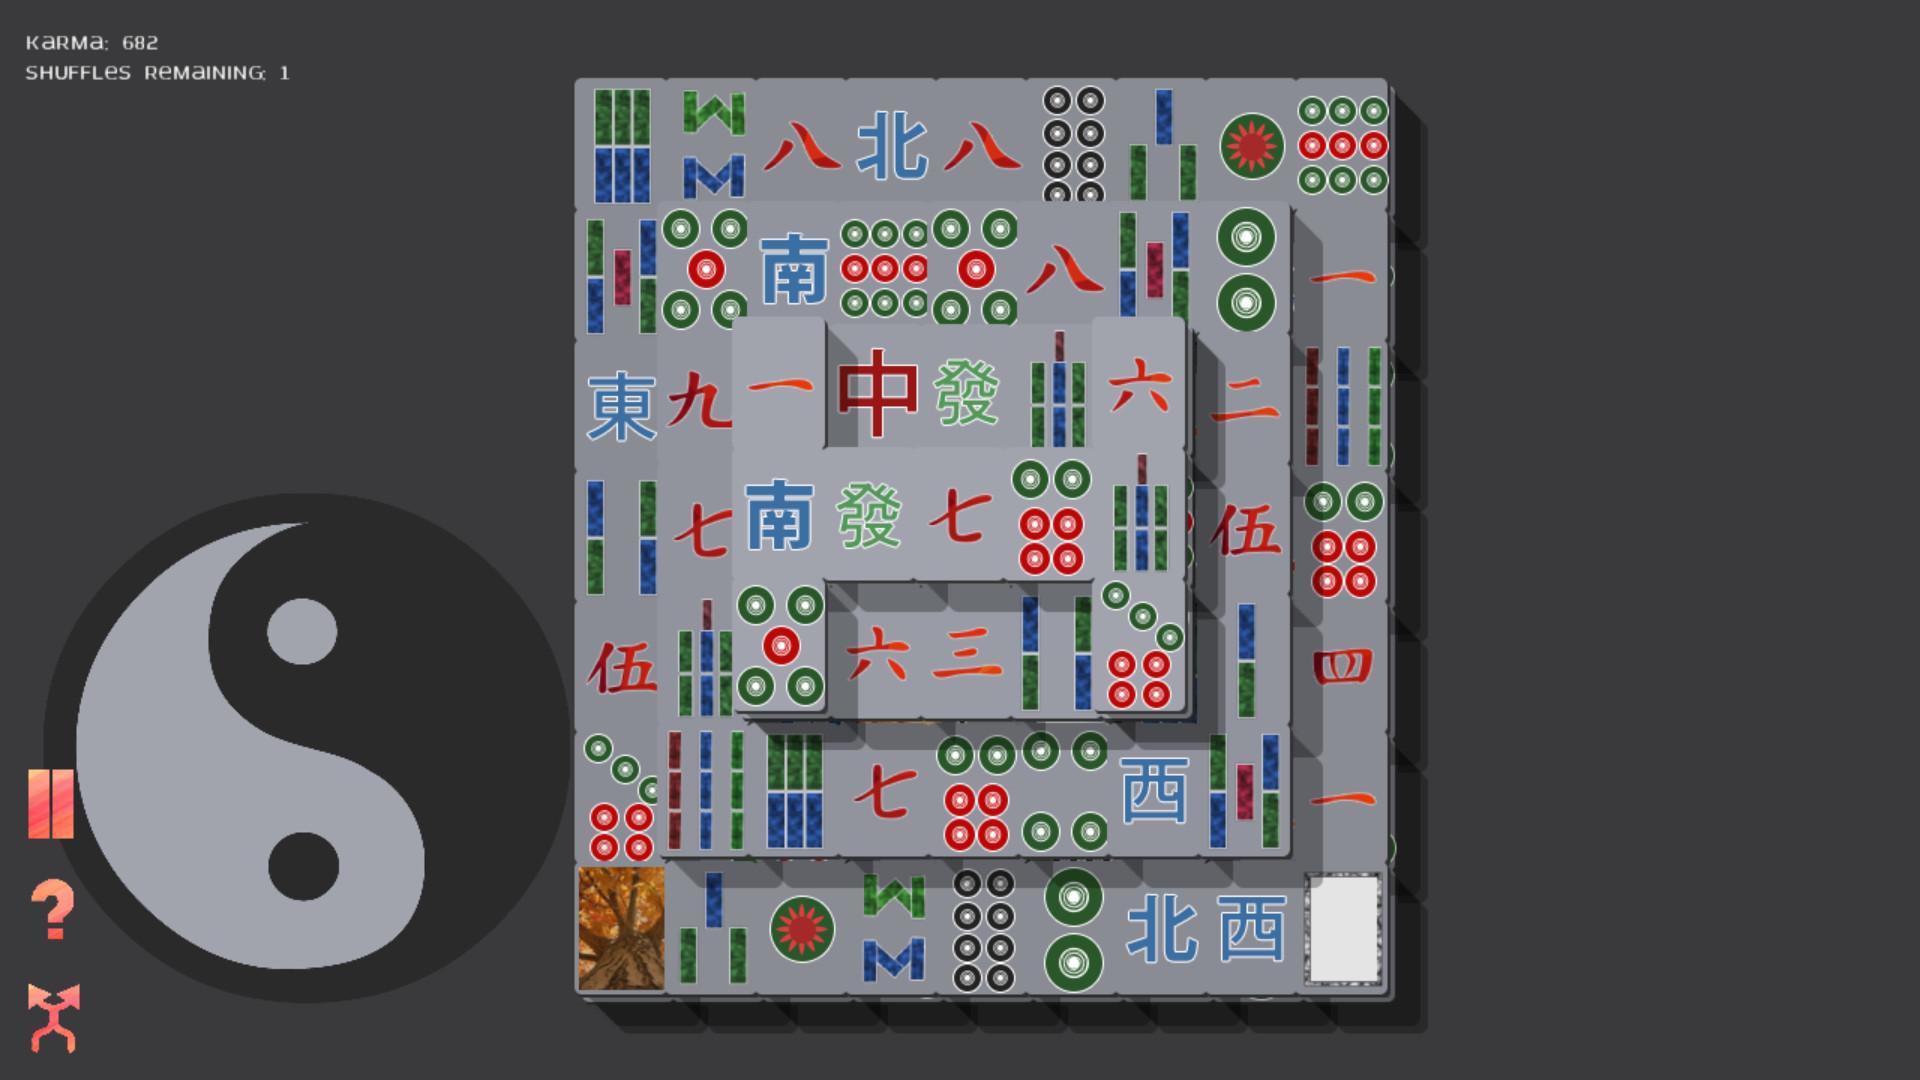 Screenshot №3 from game That's Mahjong!